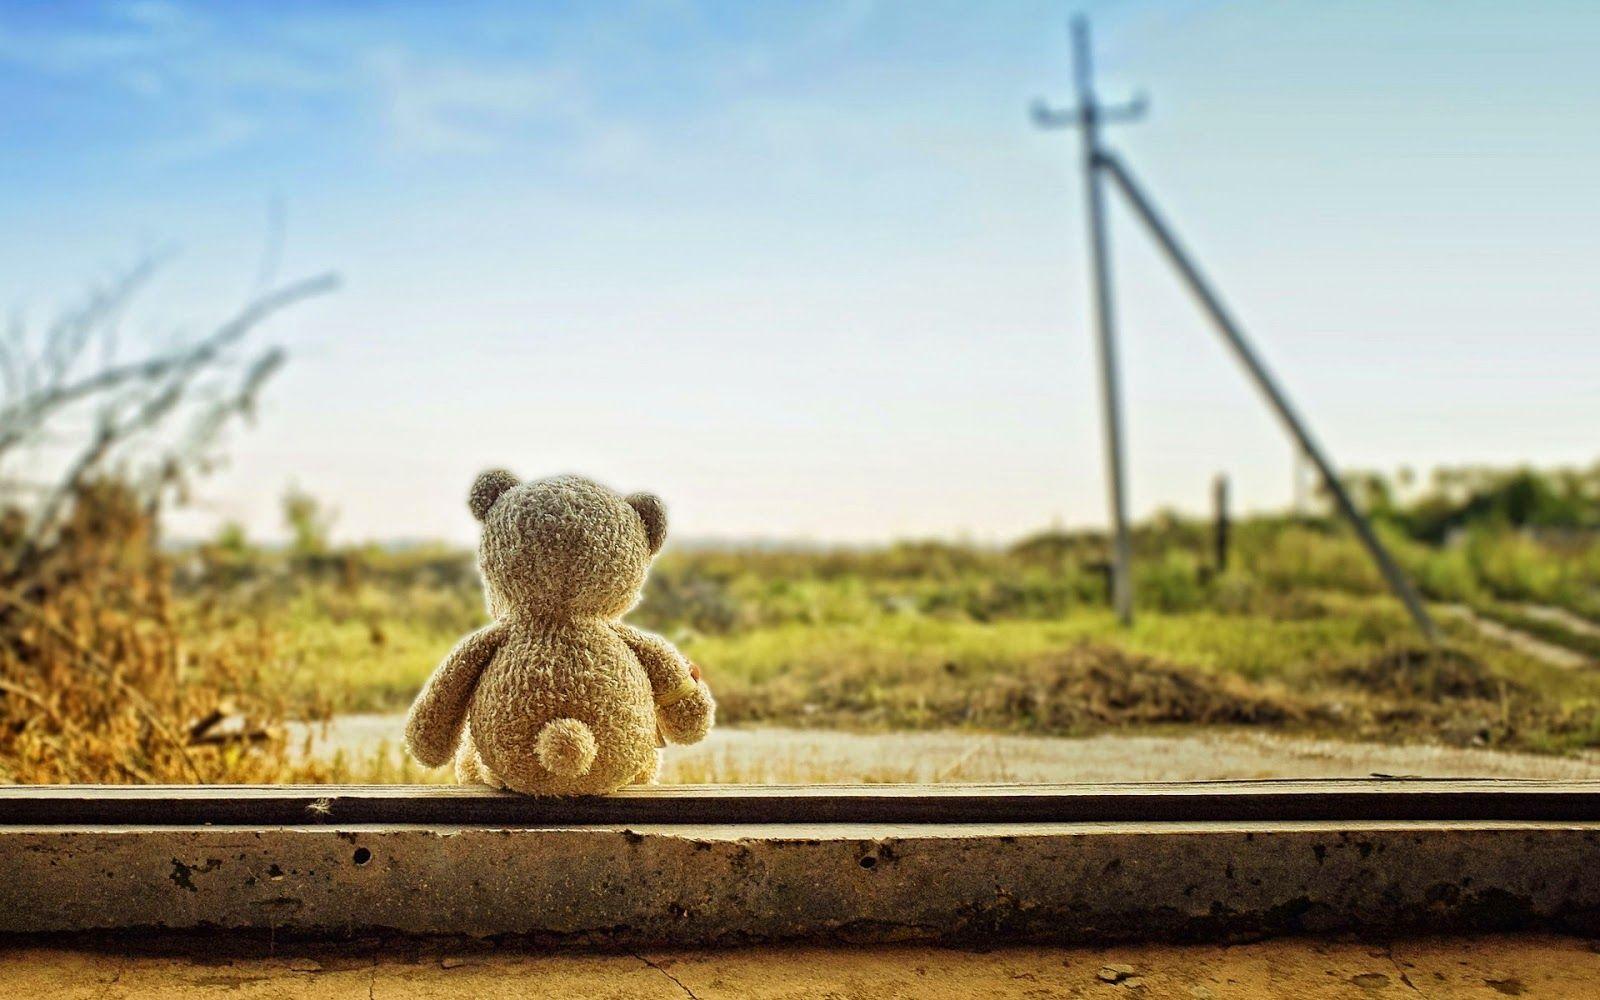 Picture of sad teddy bear lost & lonely feeling after love break